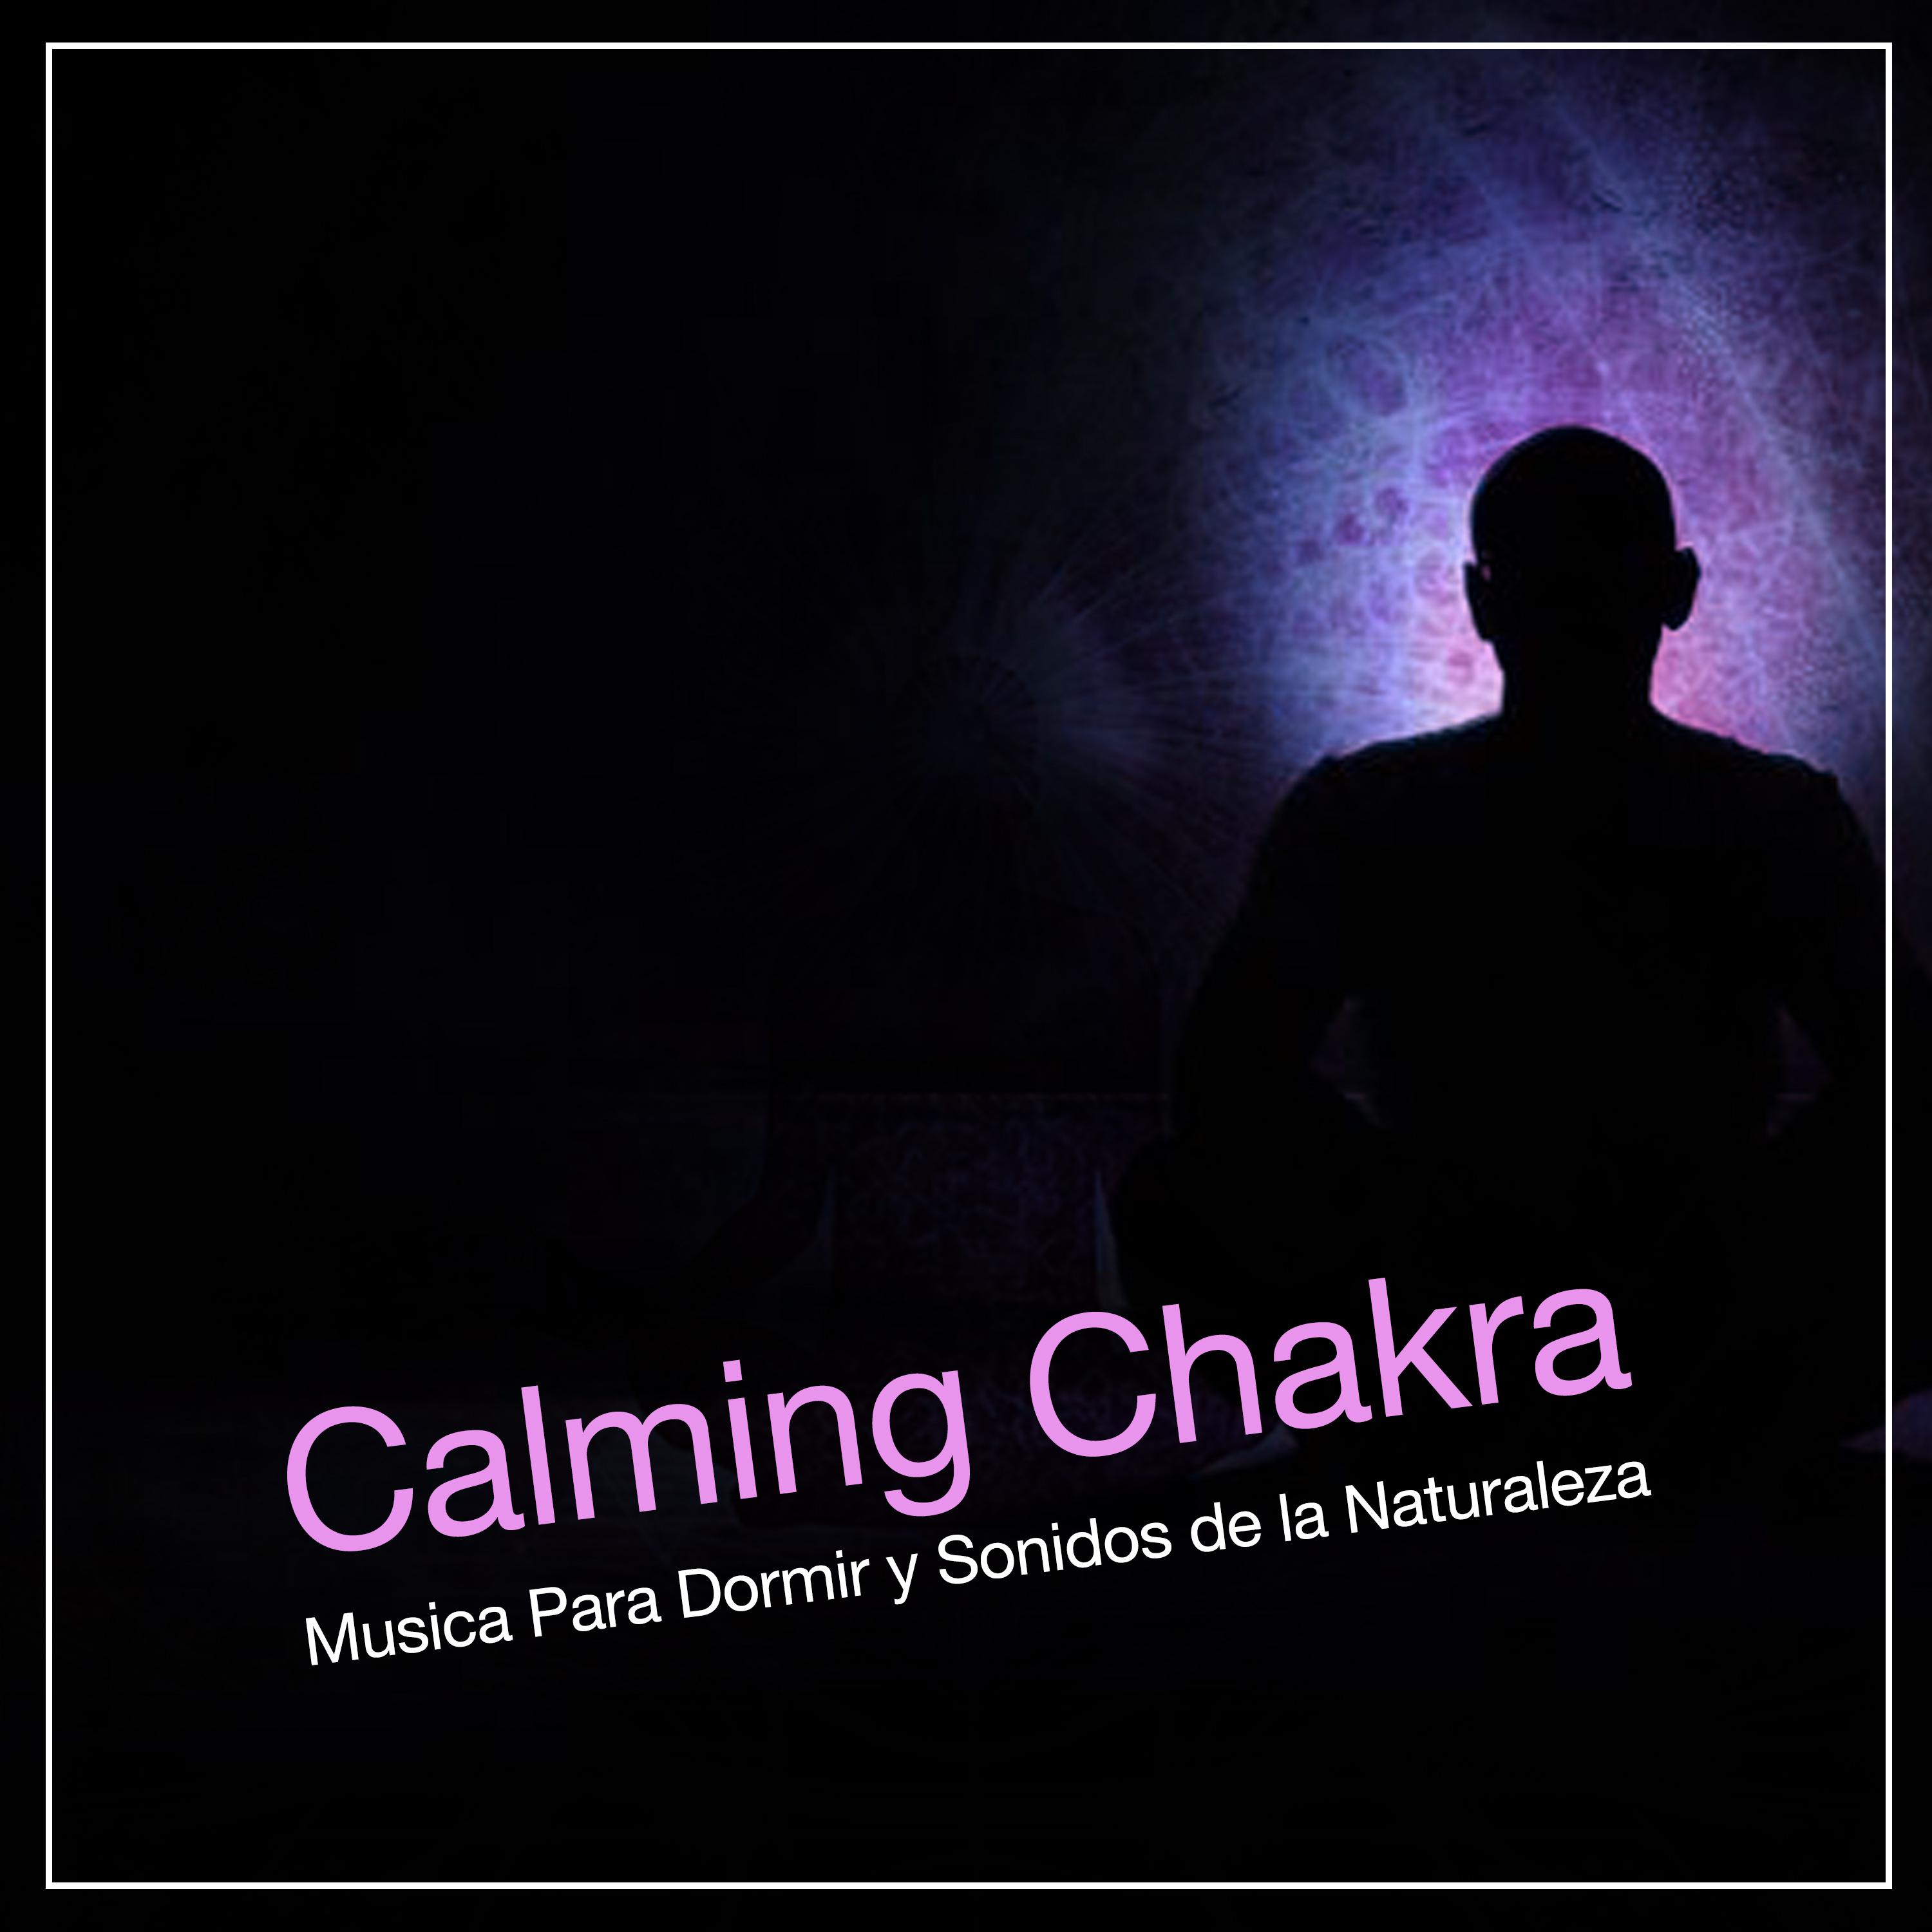 Calming Chakra